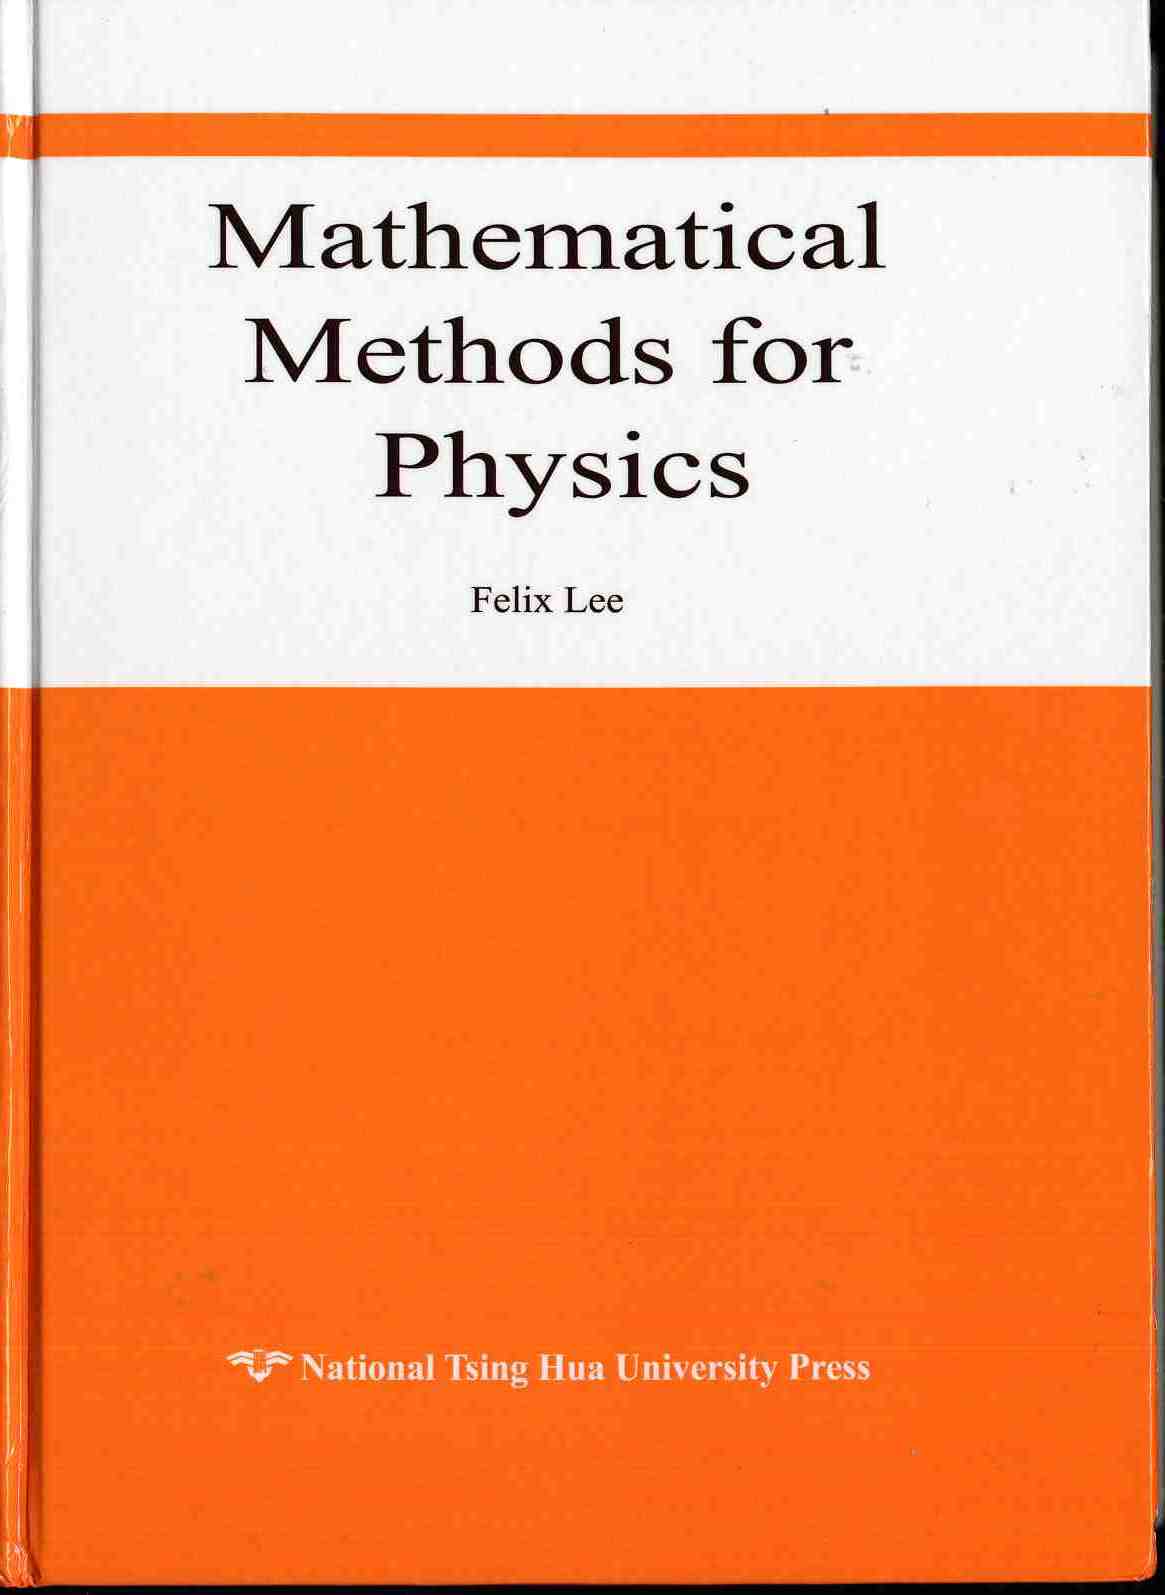 Mathematical Method for Physics